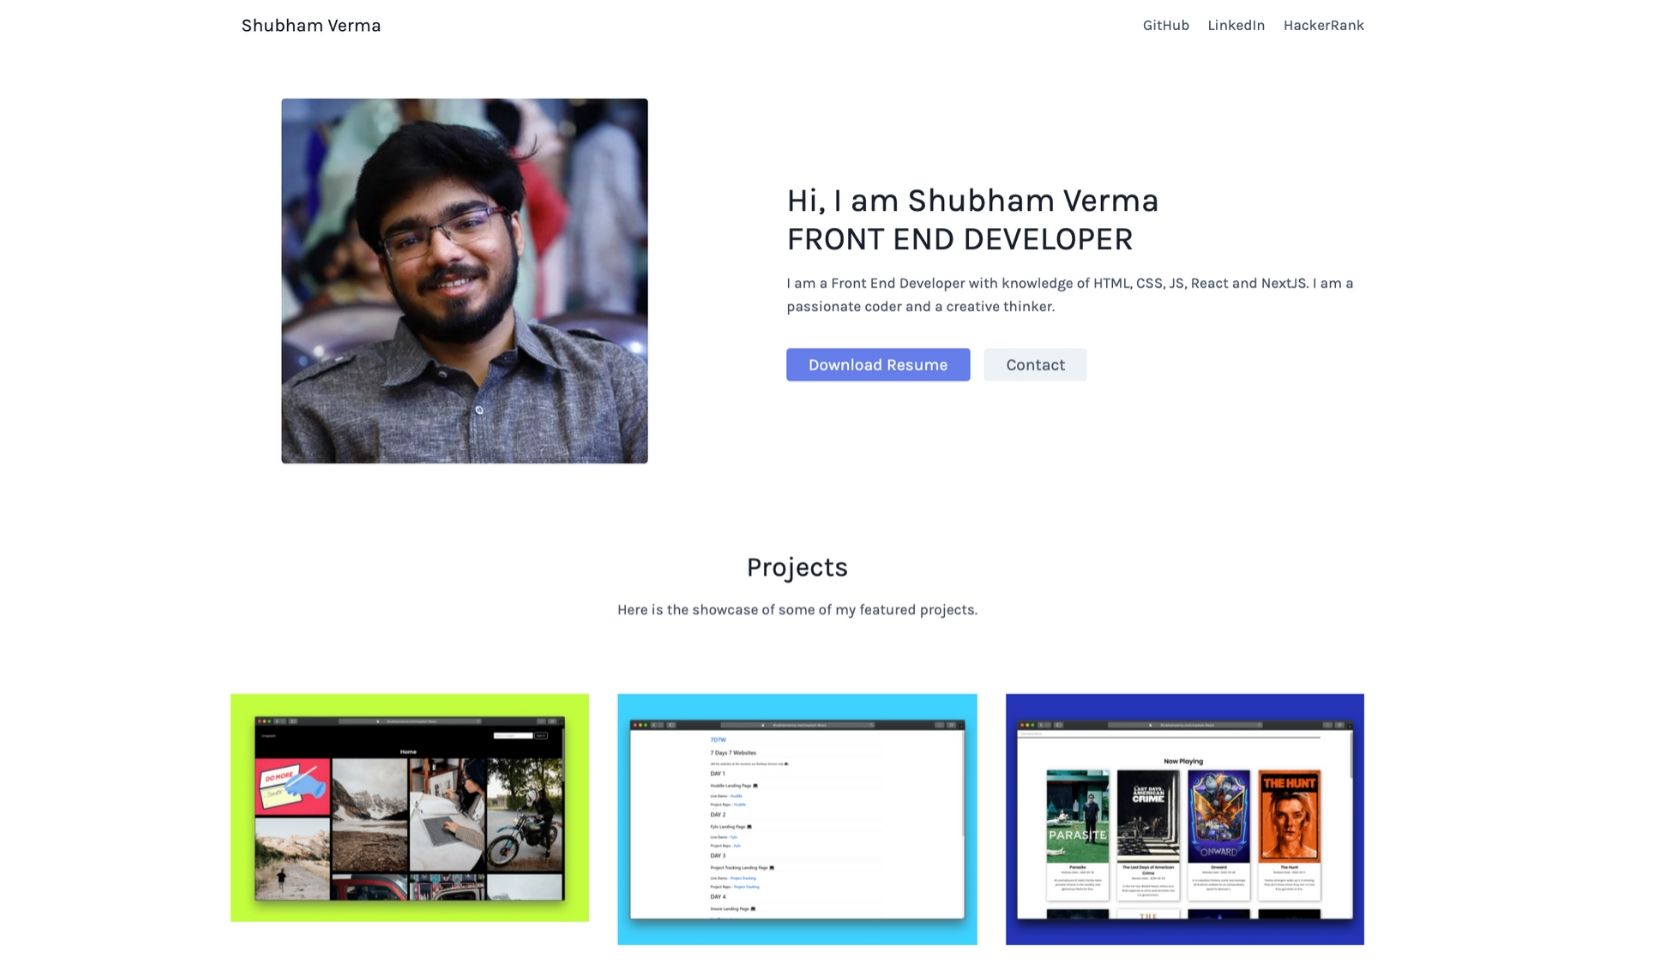 Shubham Verma's Personal Portfolio